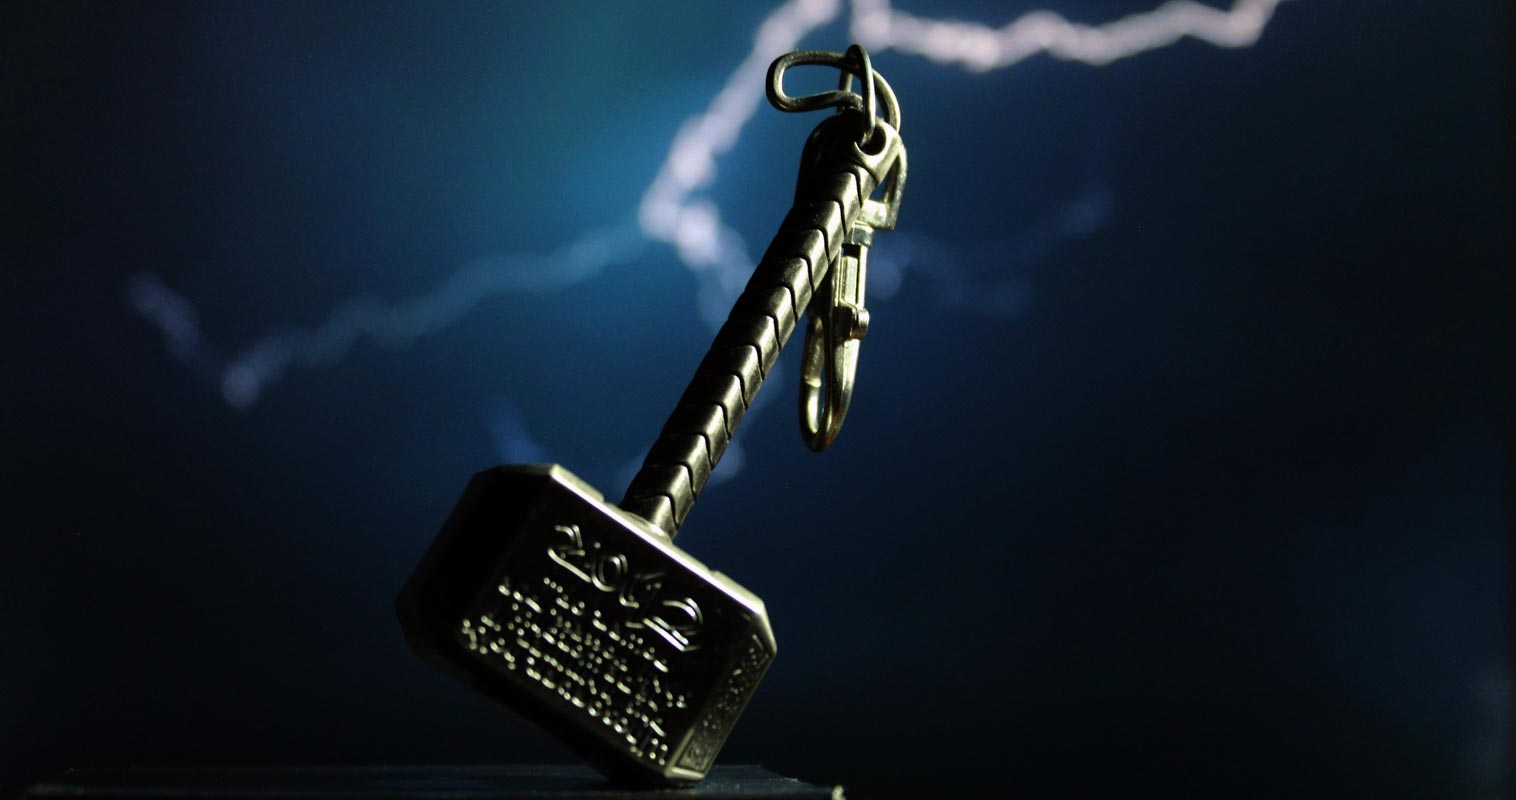 Thor Hammer Key Chain